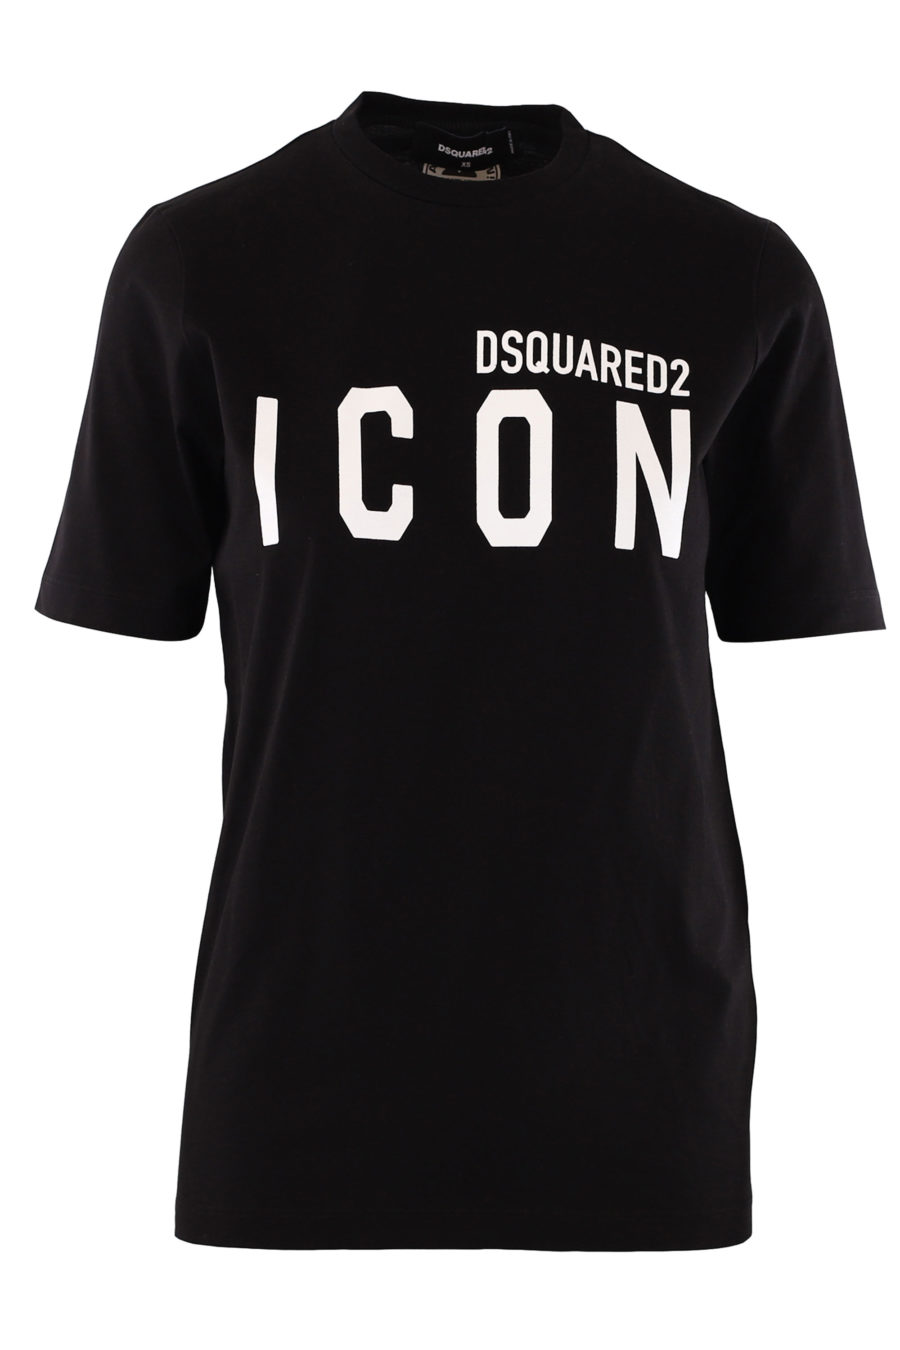 T-shirt noir avec logo "Icon" blanc - IMG 9876